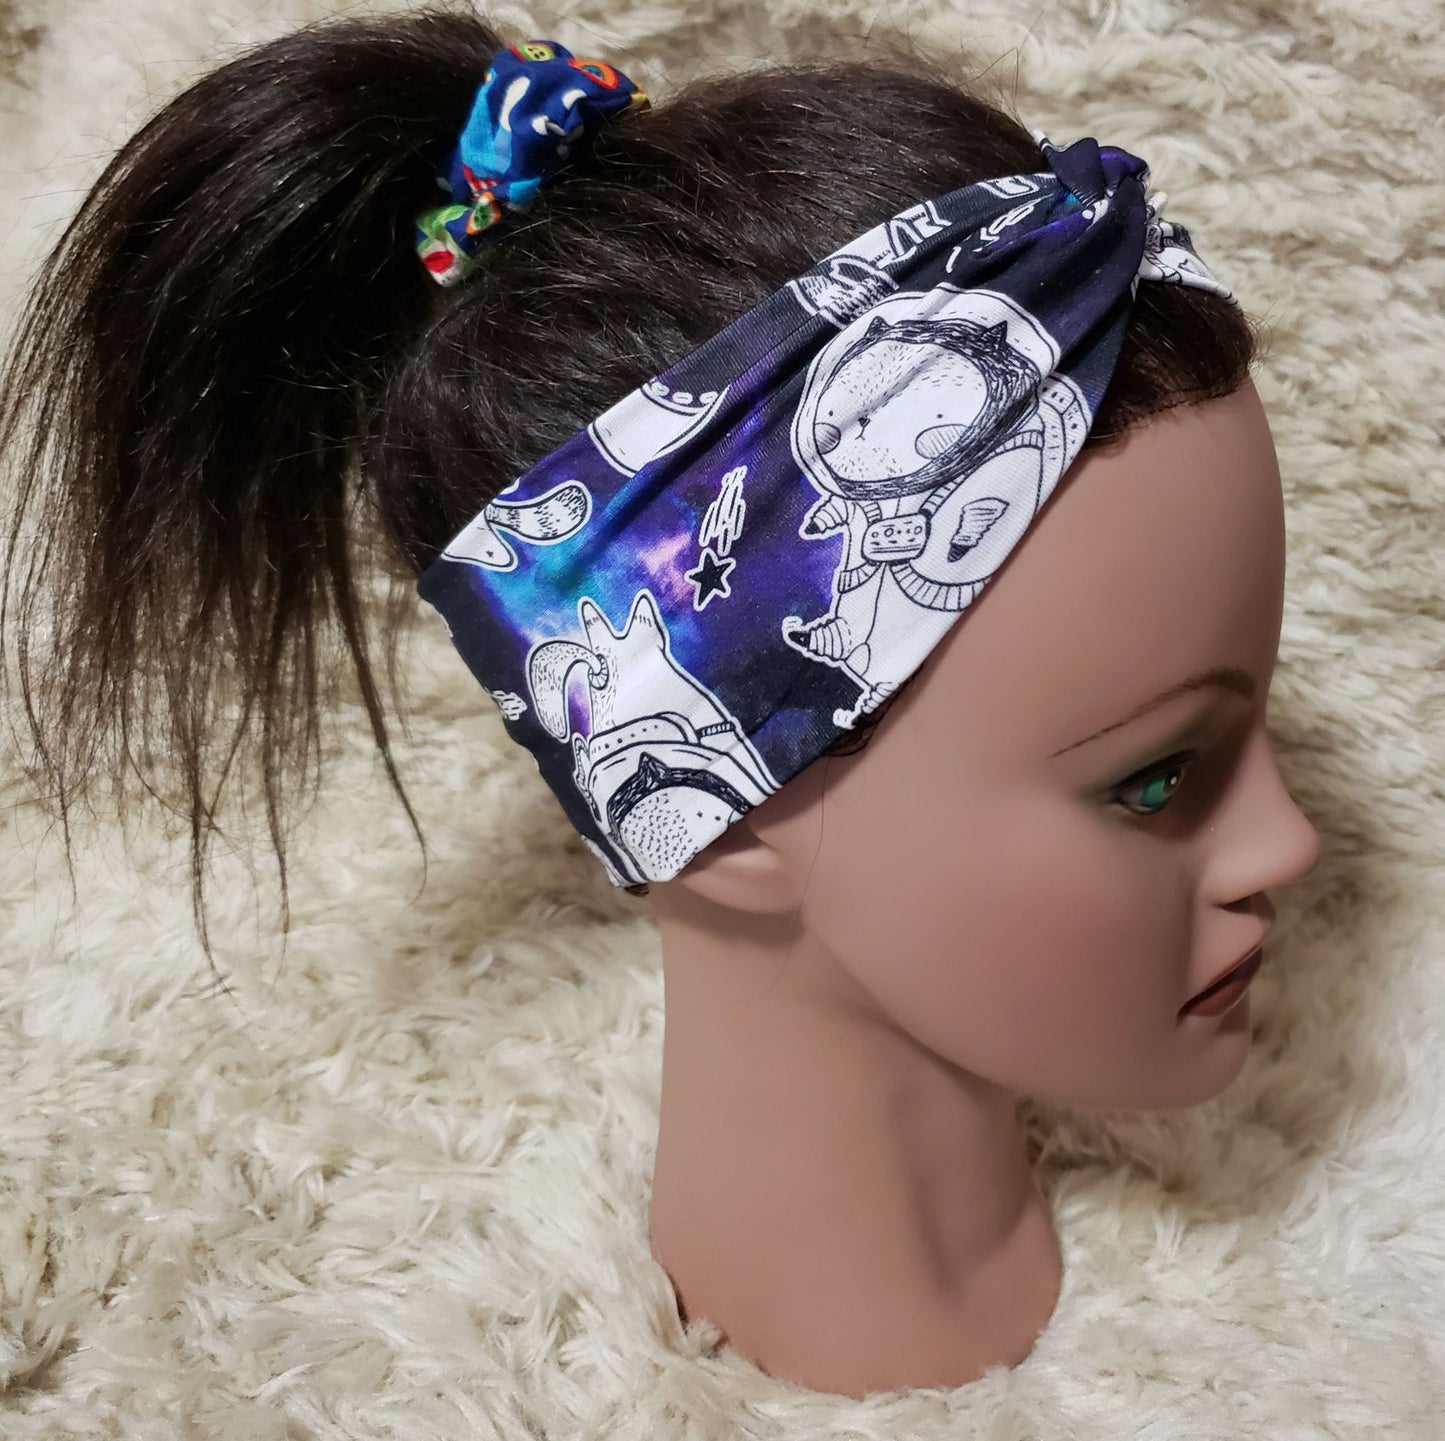 Astrobuddies turban style headband